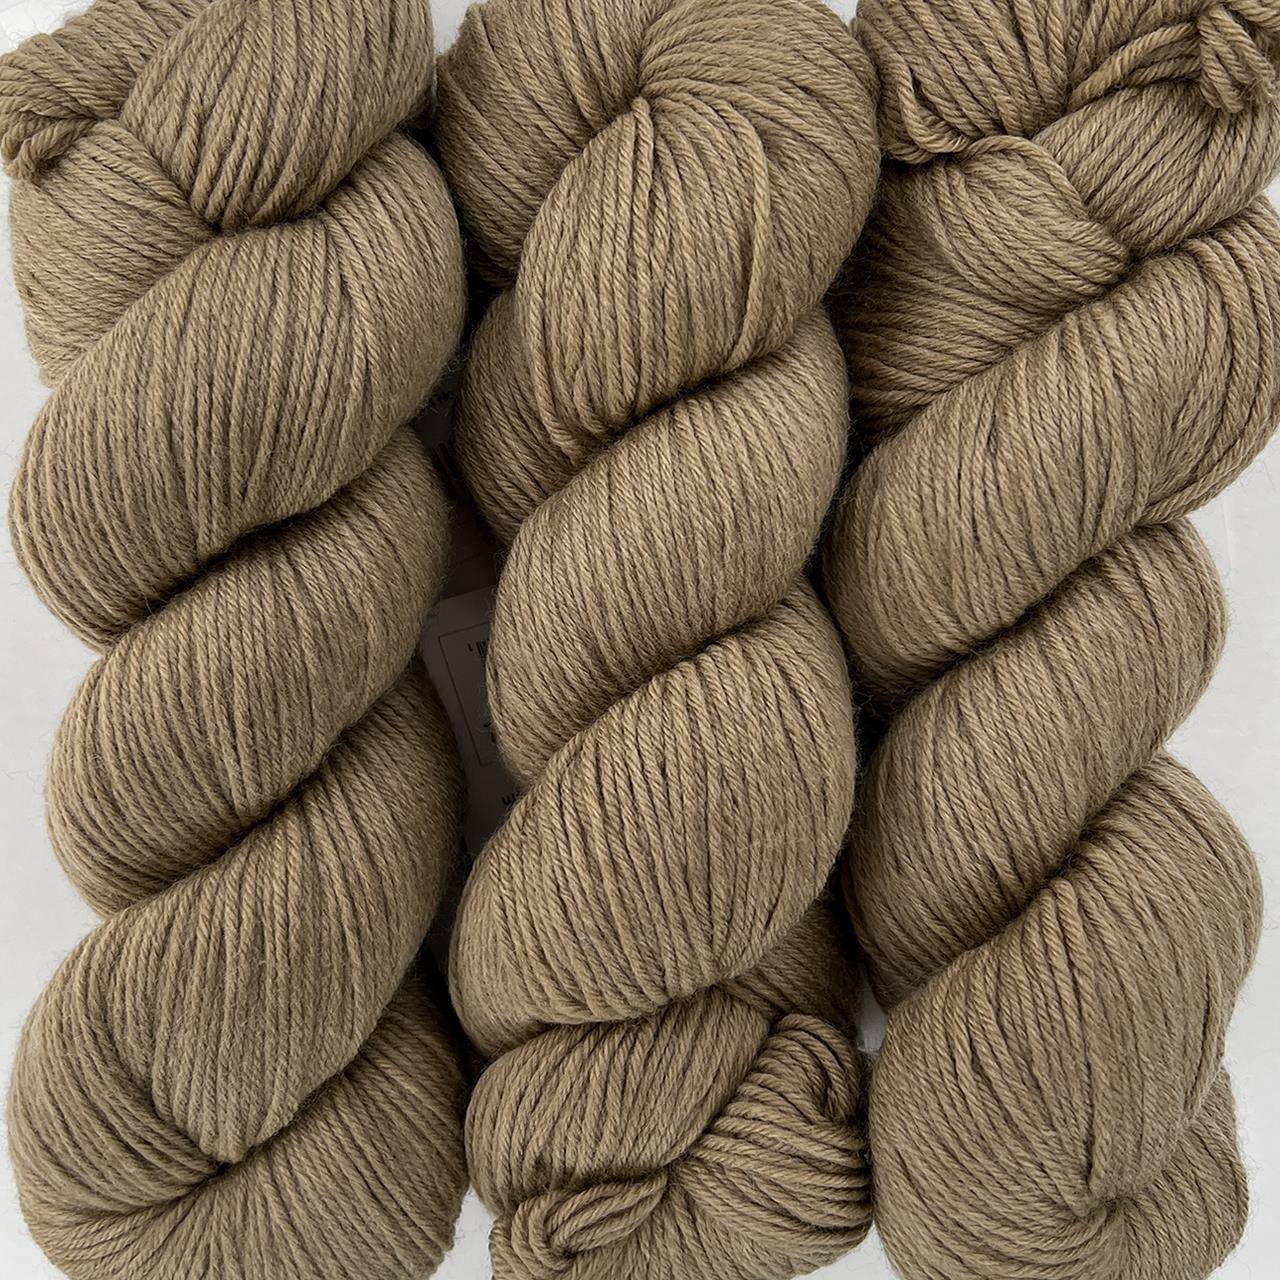 Cascade Yarns Heritage 6 - Camel (5610) 100g (3.5oz) 75% Merino Wool 25% Nylon